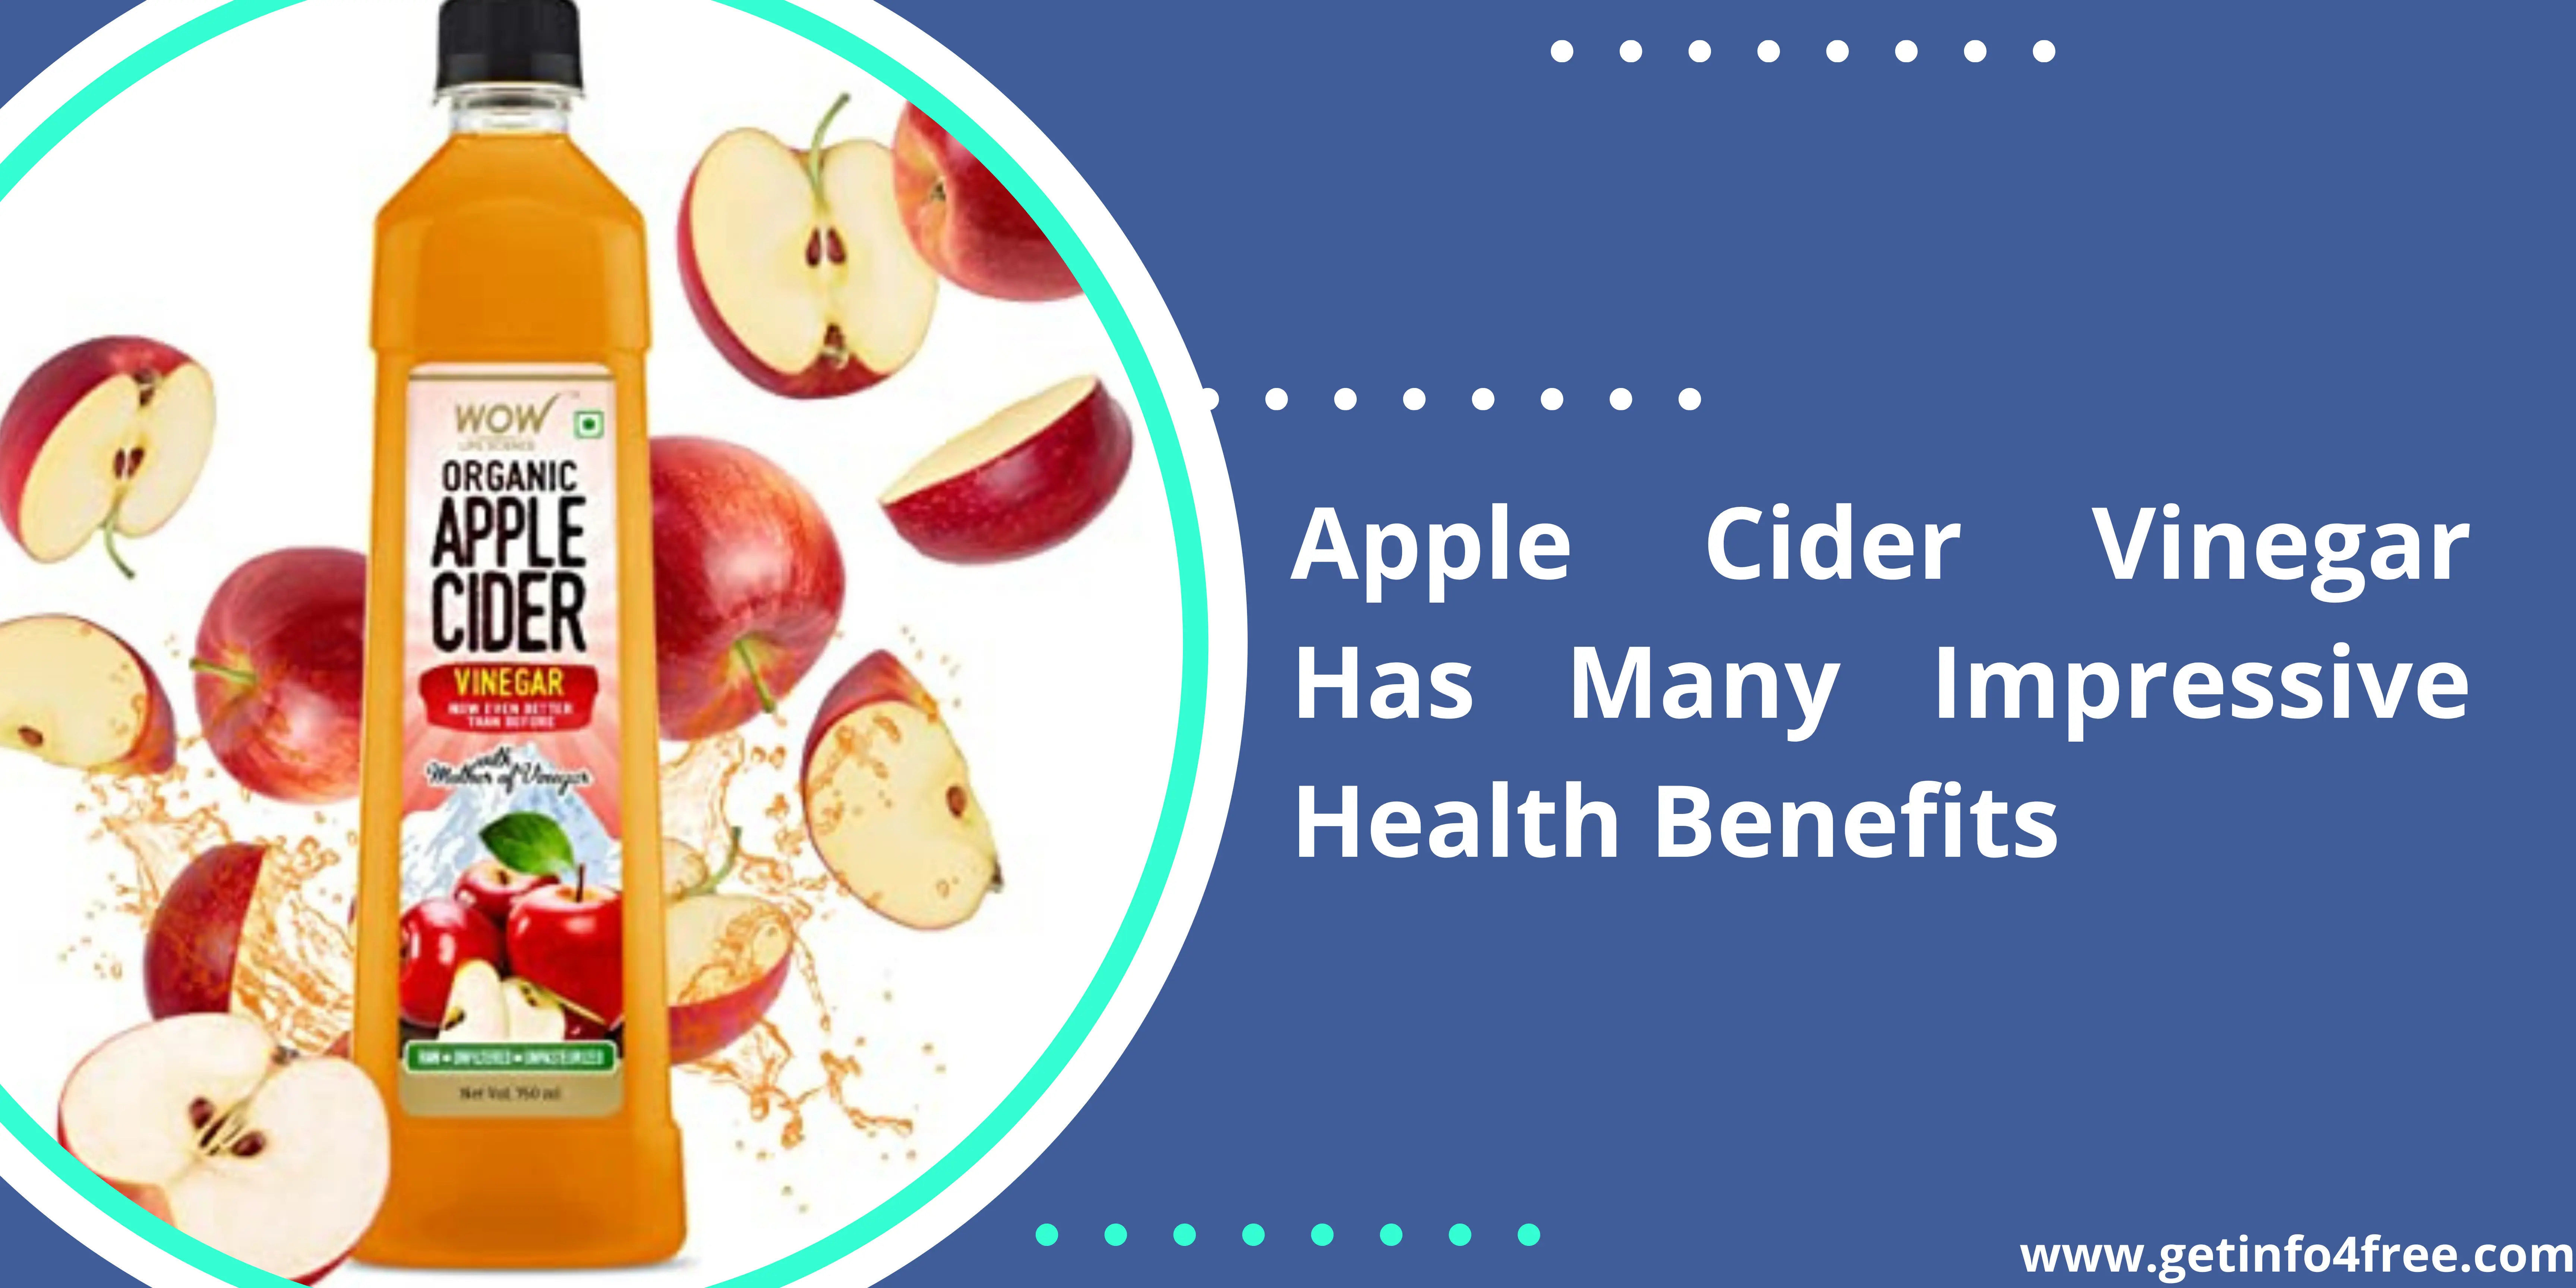 Apple Cider Vinegar Has Many Impressive Health Benefits